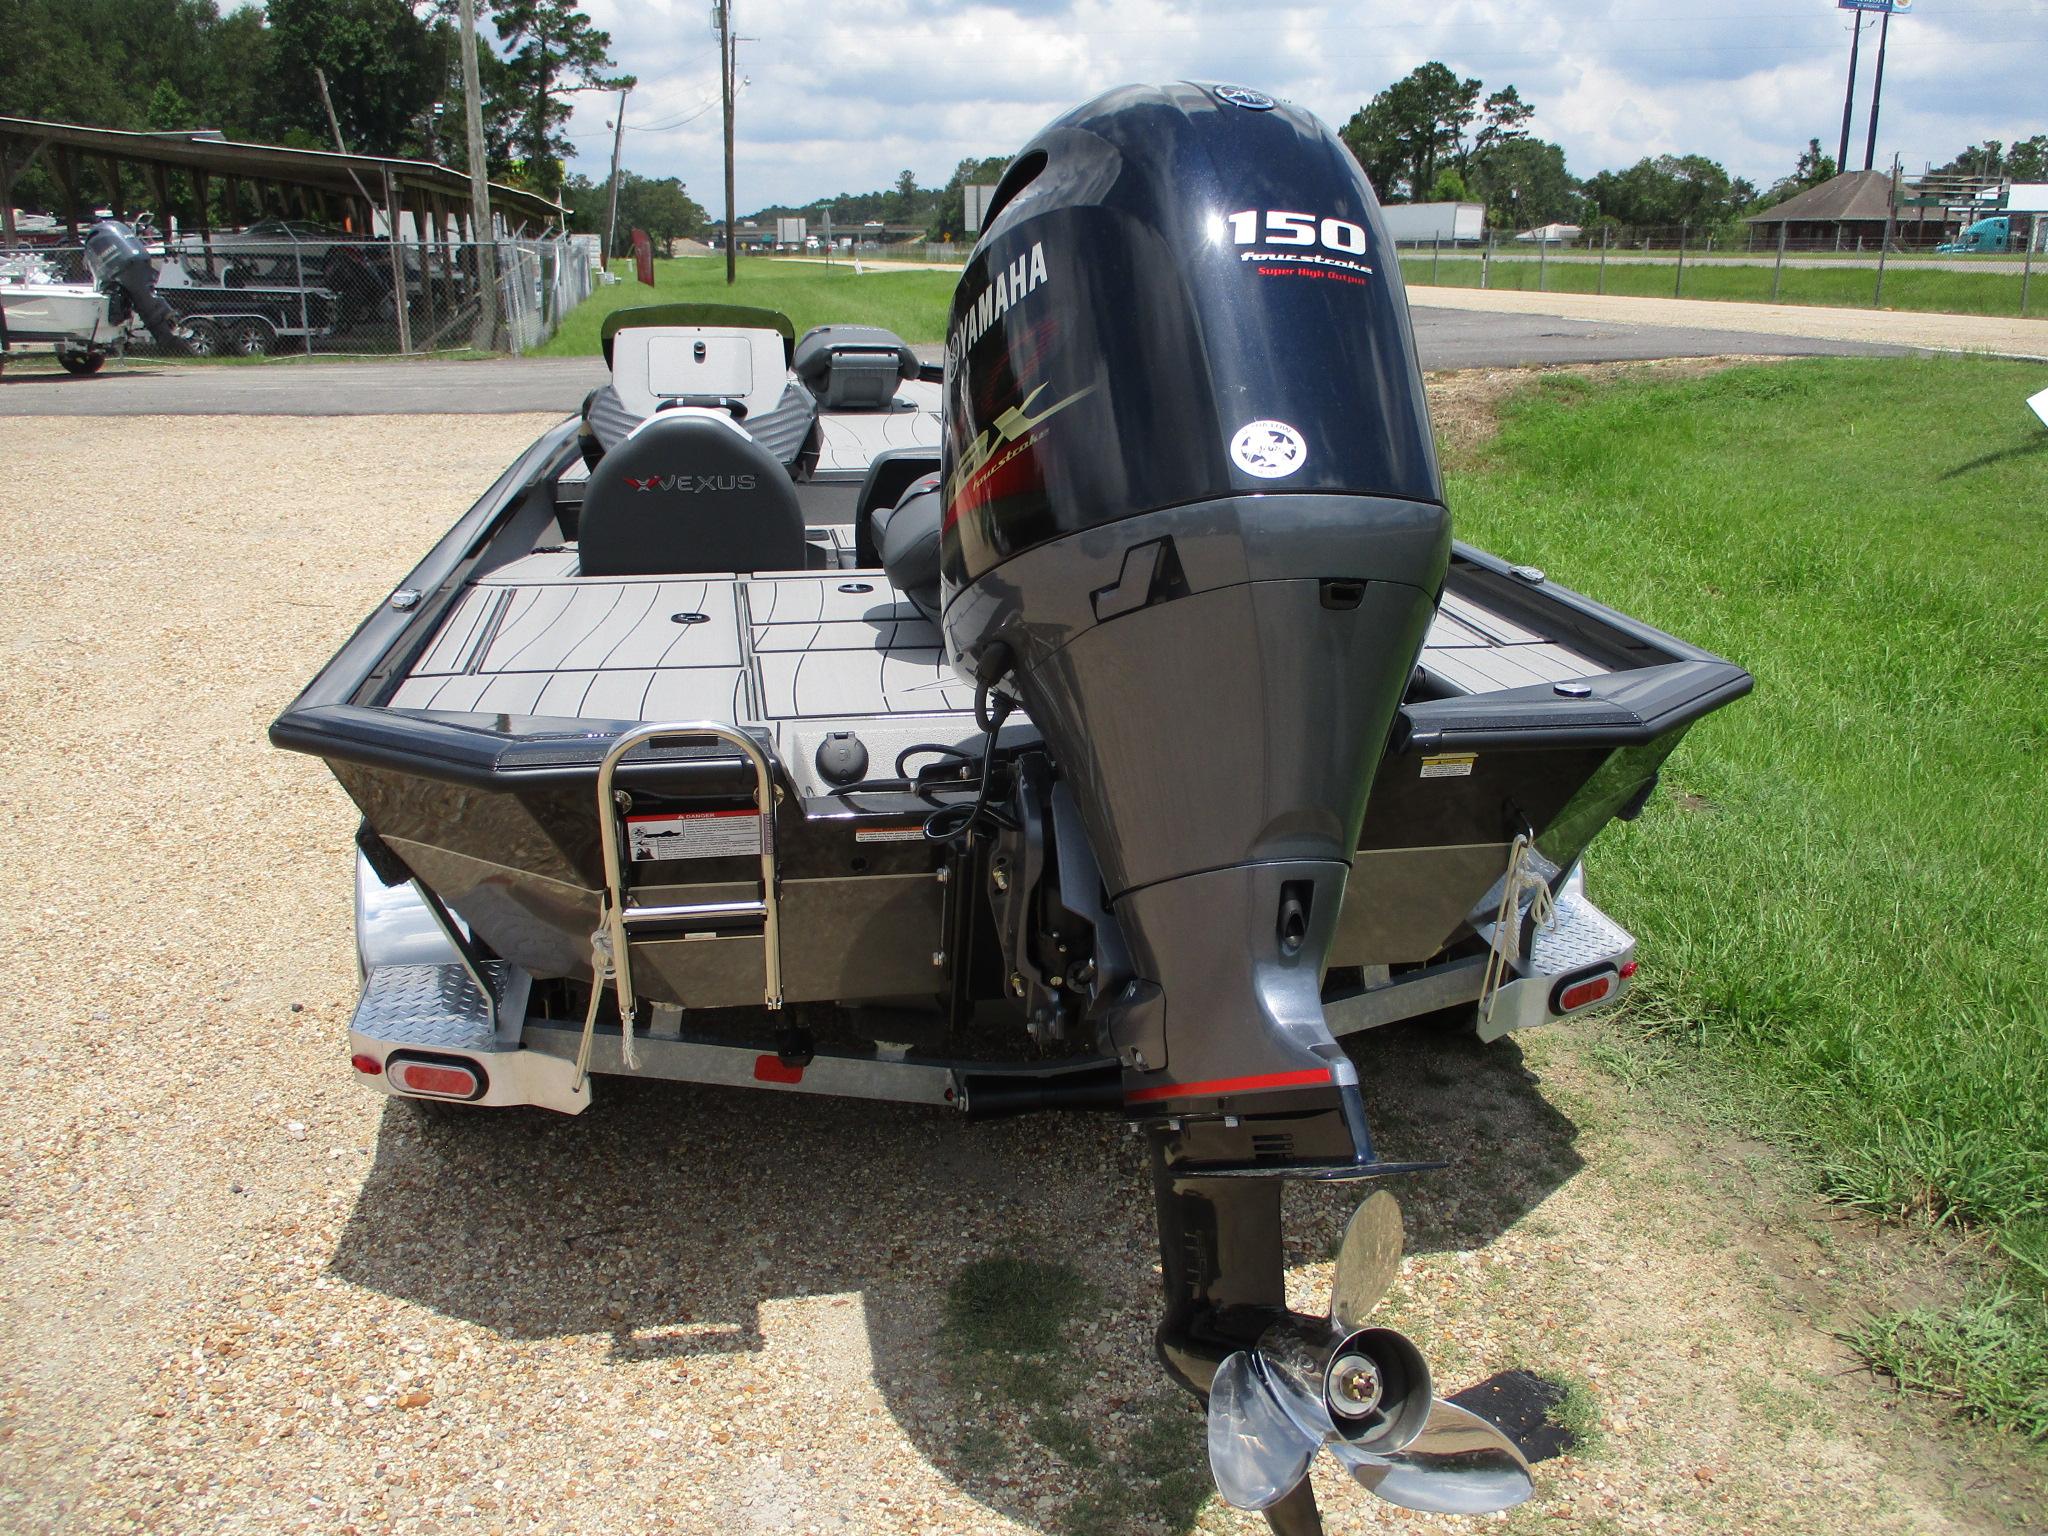 New  2022 19' Vexus AVX1980 Bass Boat in Slidell, Louisiana